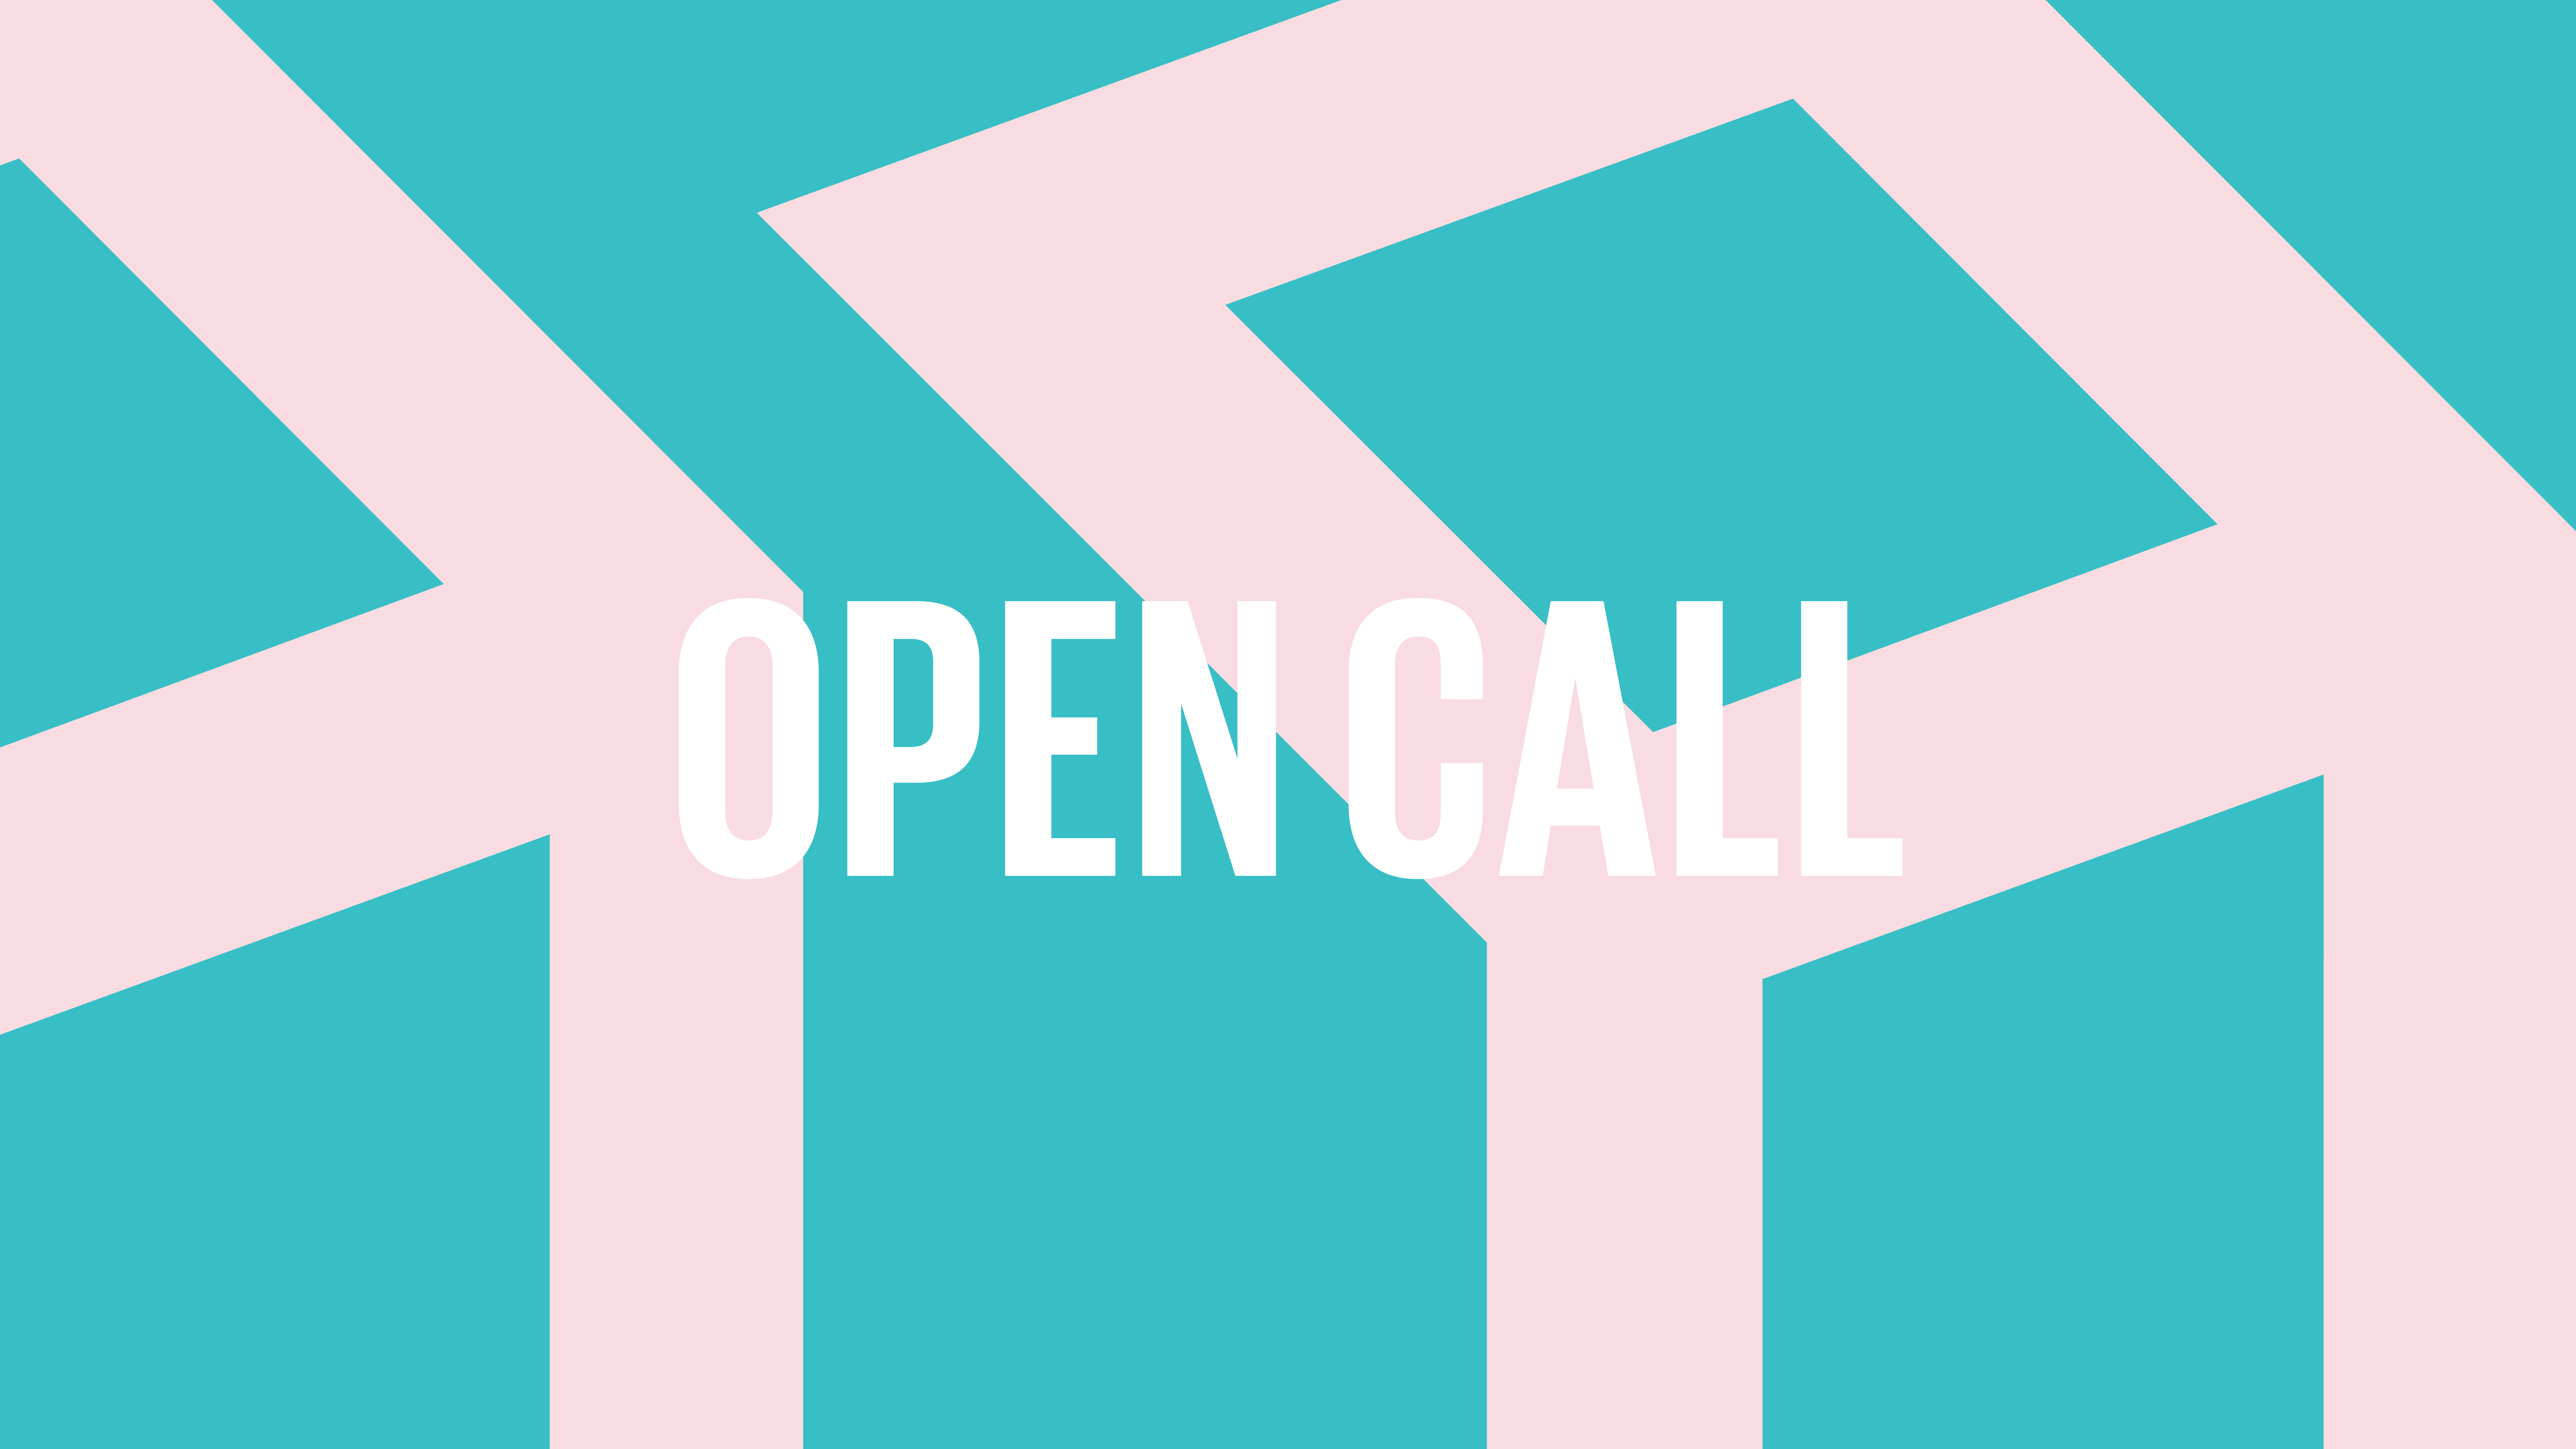 Open call, illustration